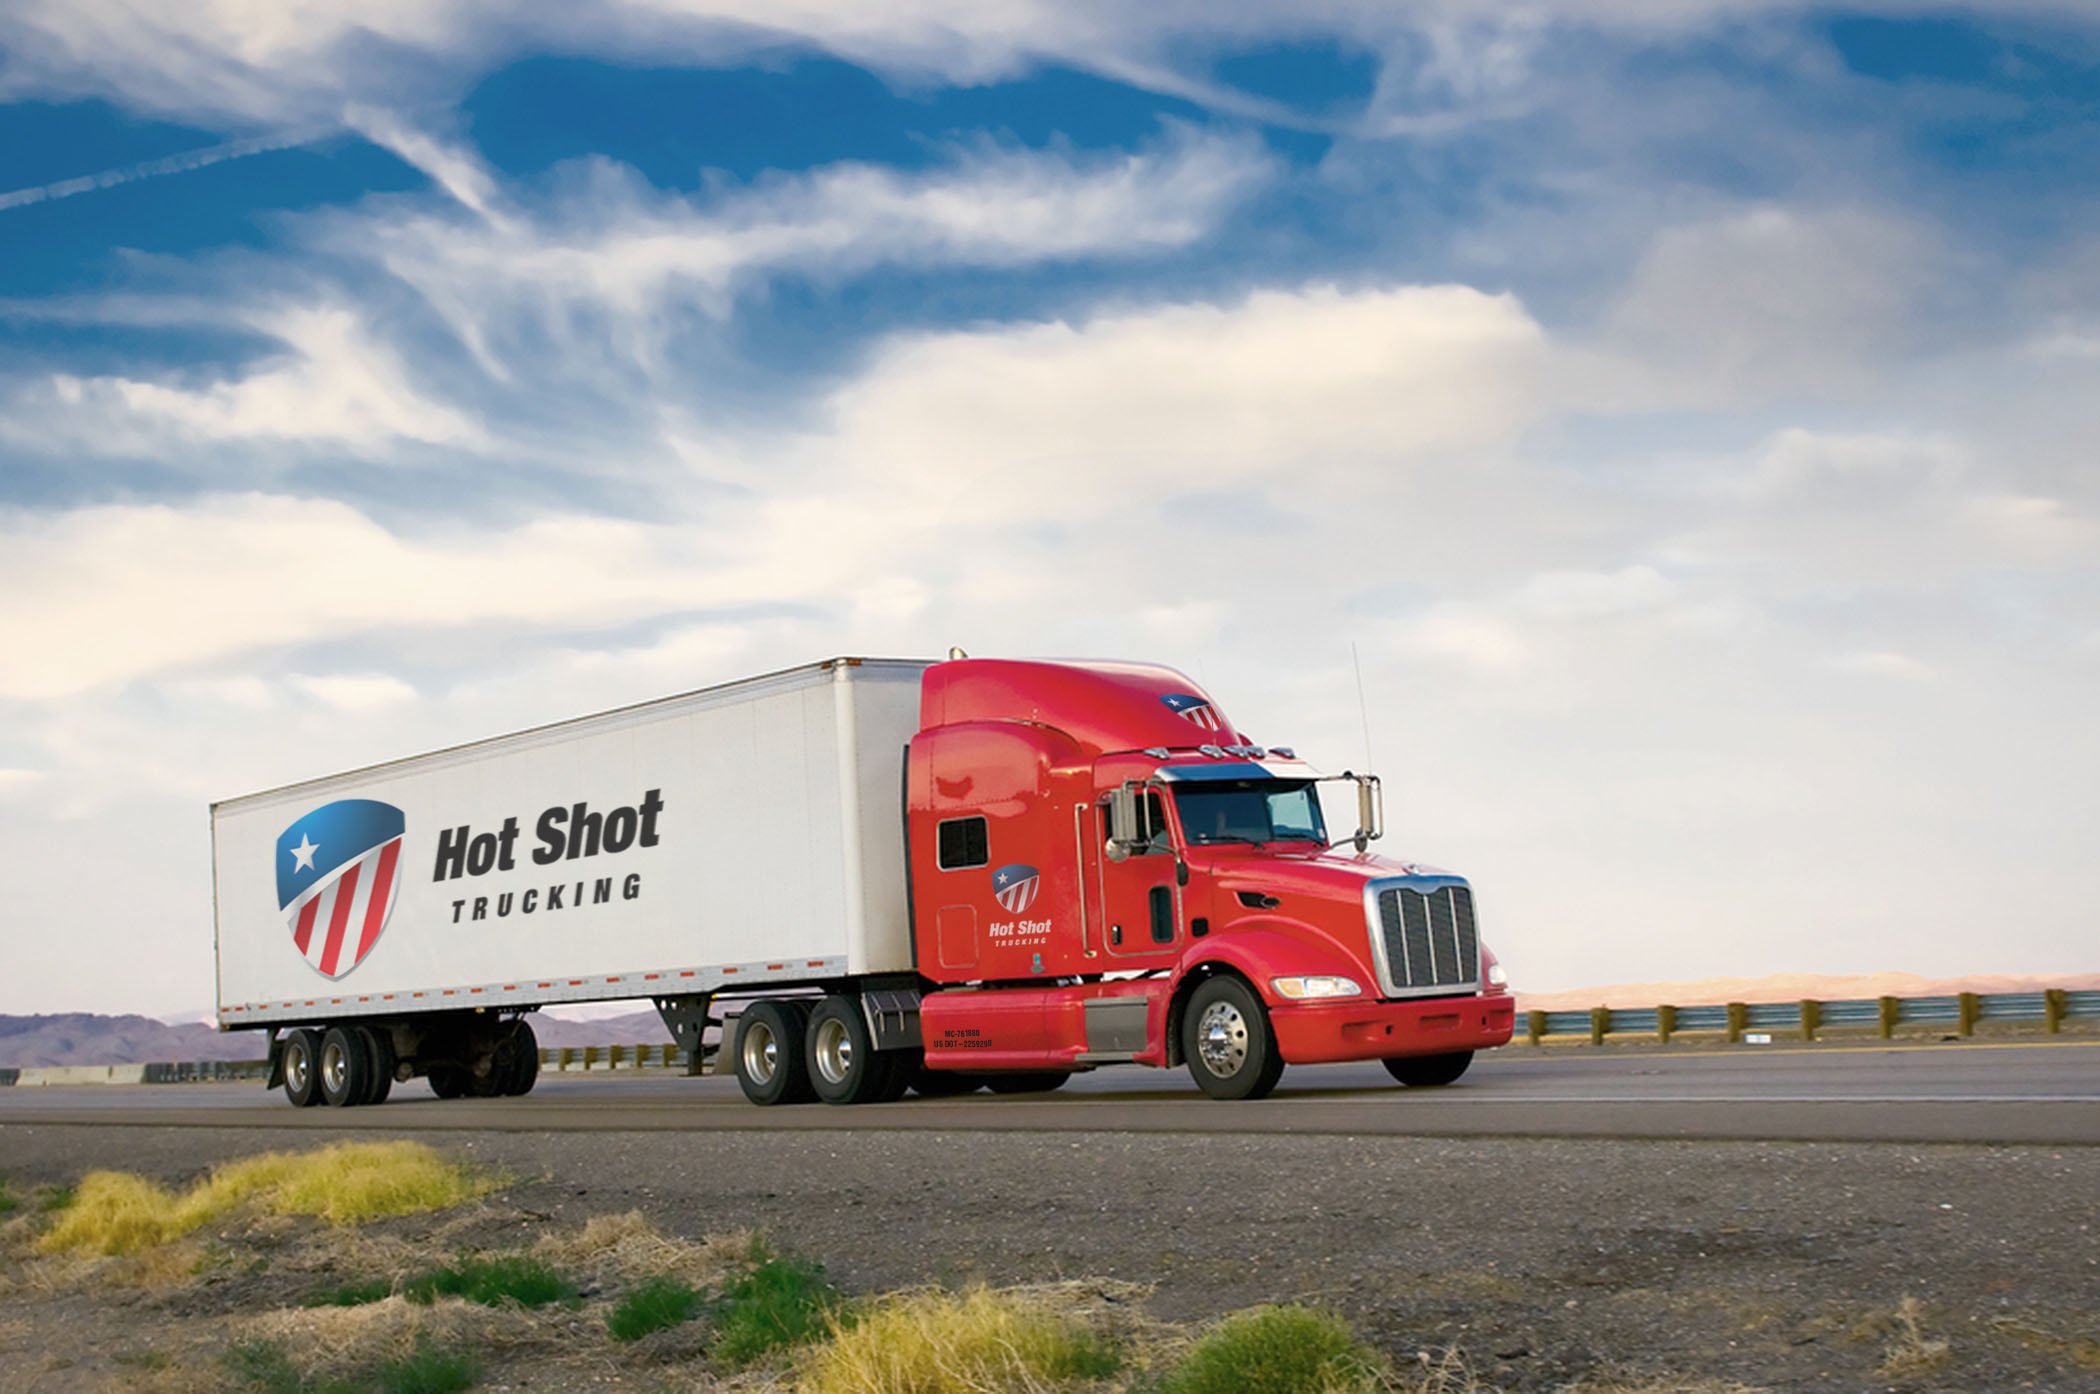 Hot Shot Trucking Services in Abilene